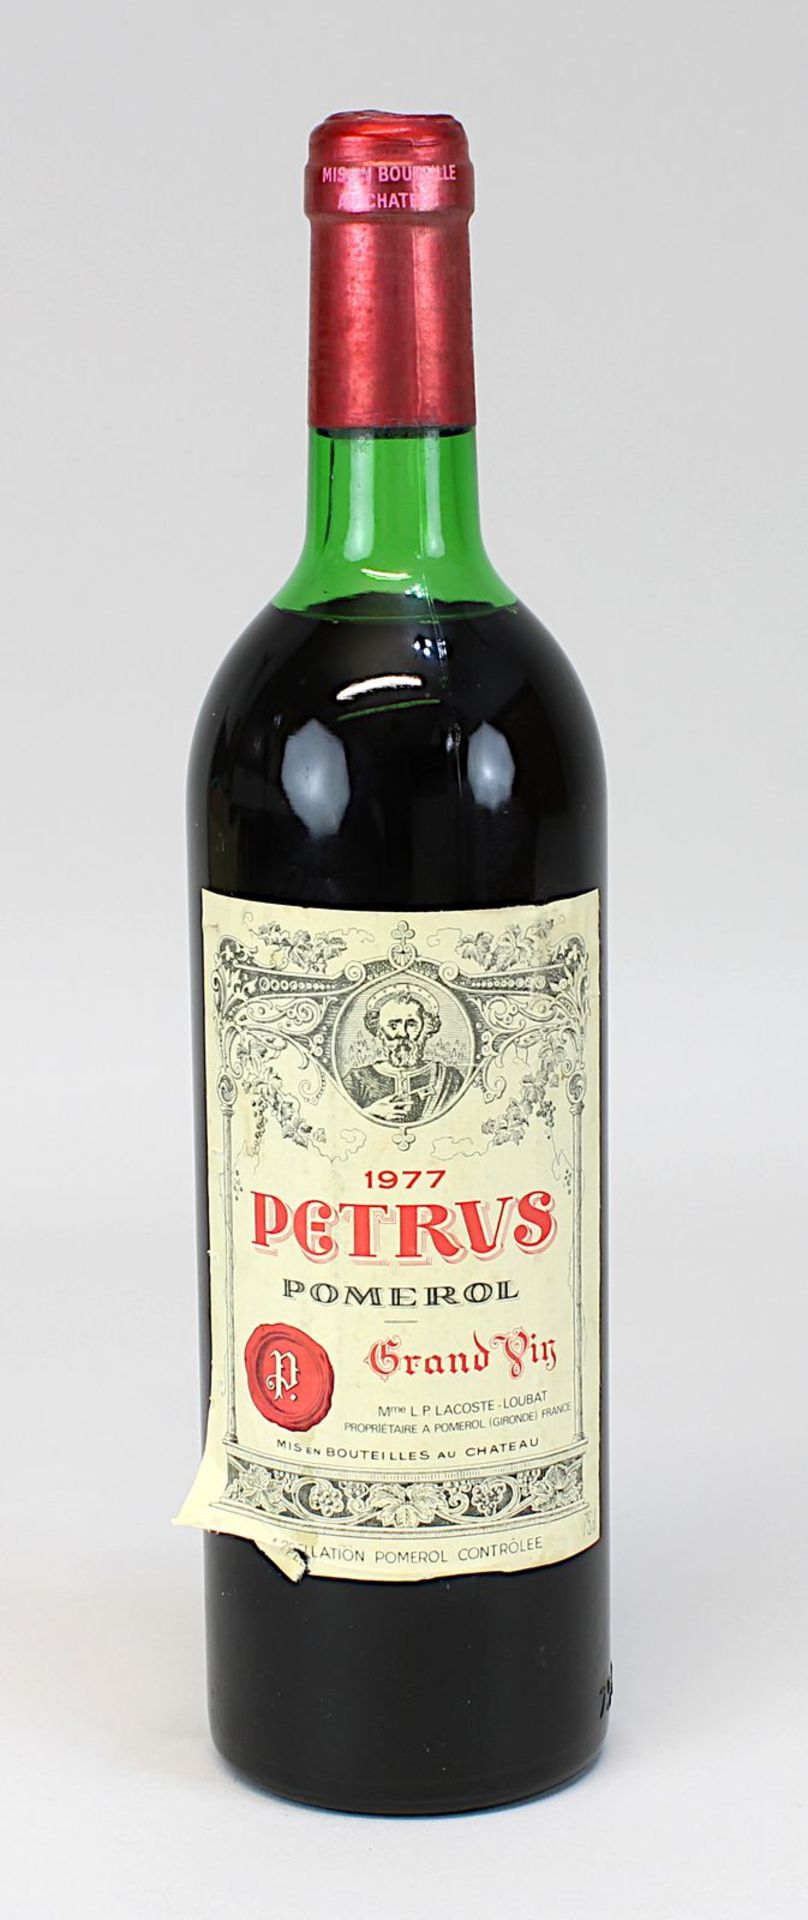 Eine Flasche 1977er Château Petrus Pomerol, Grand Vin, Mme L.P. Lacoste-Loubat, Pomerol Gironde,